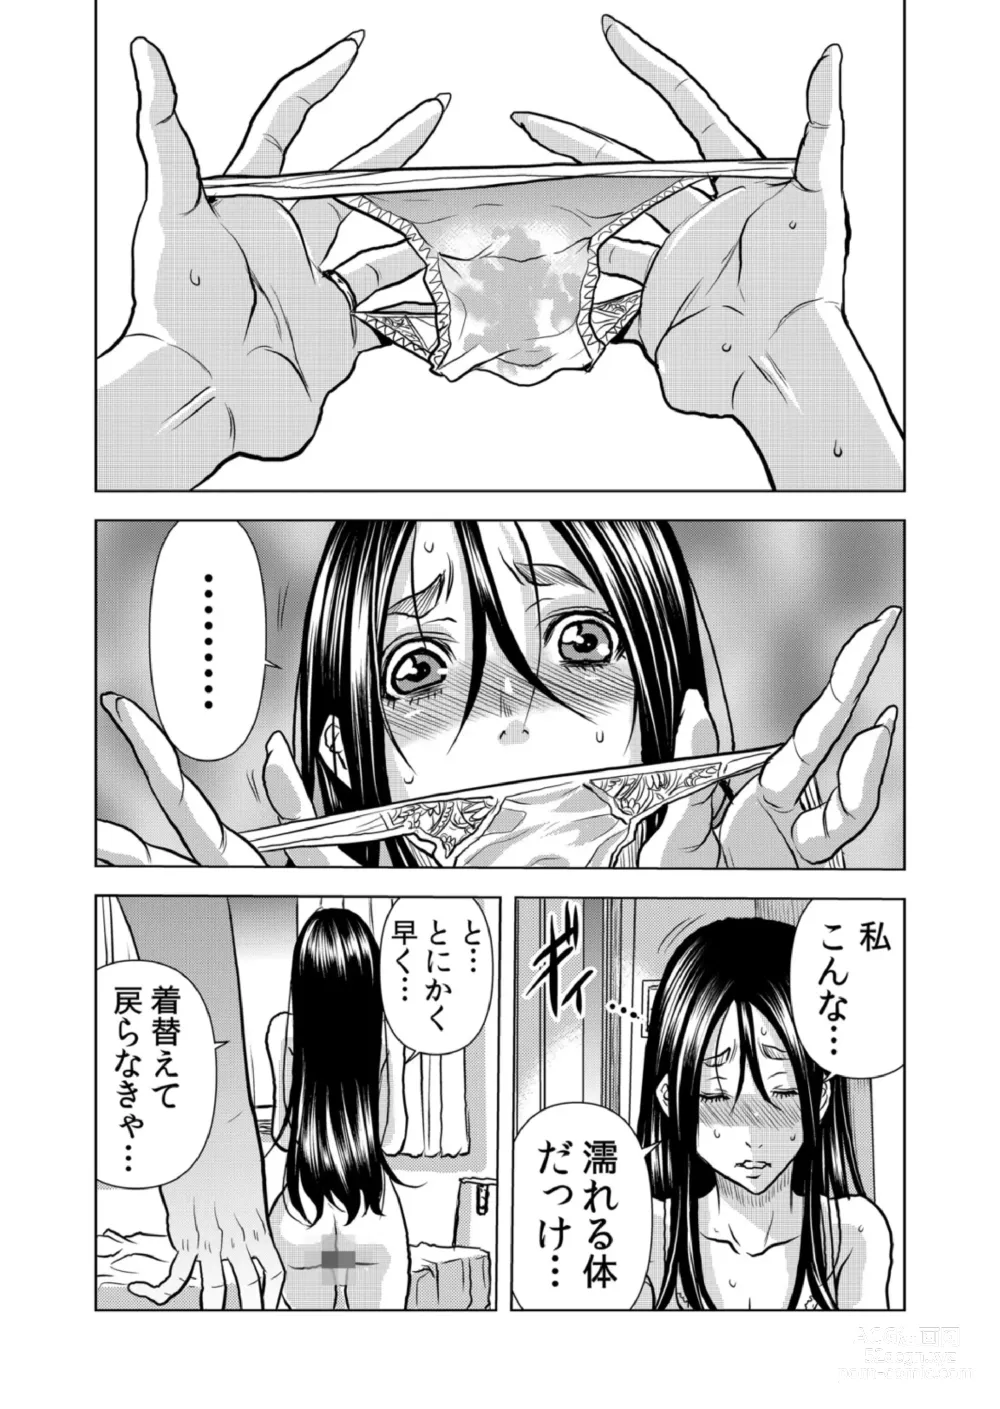 Page 15 of manga Mamasan,yobai ha OK desuka? VOL9